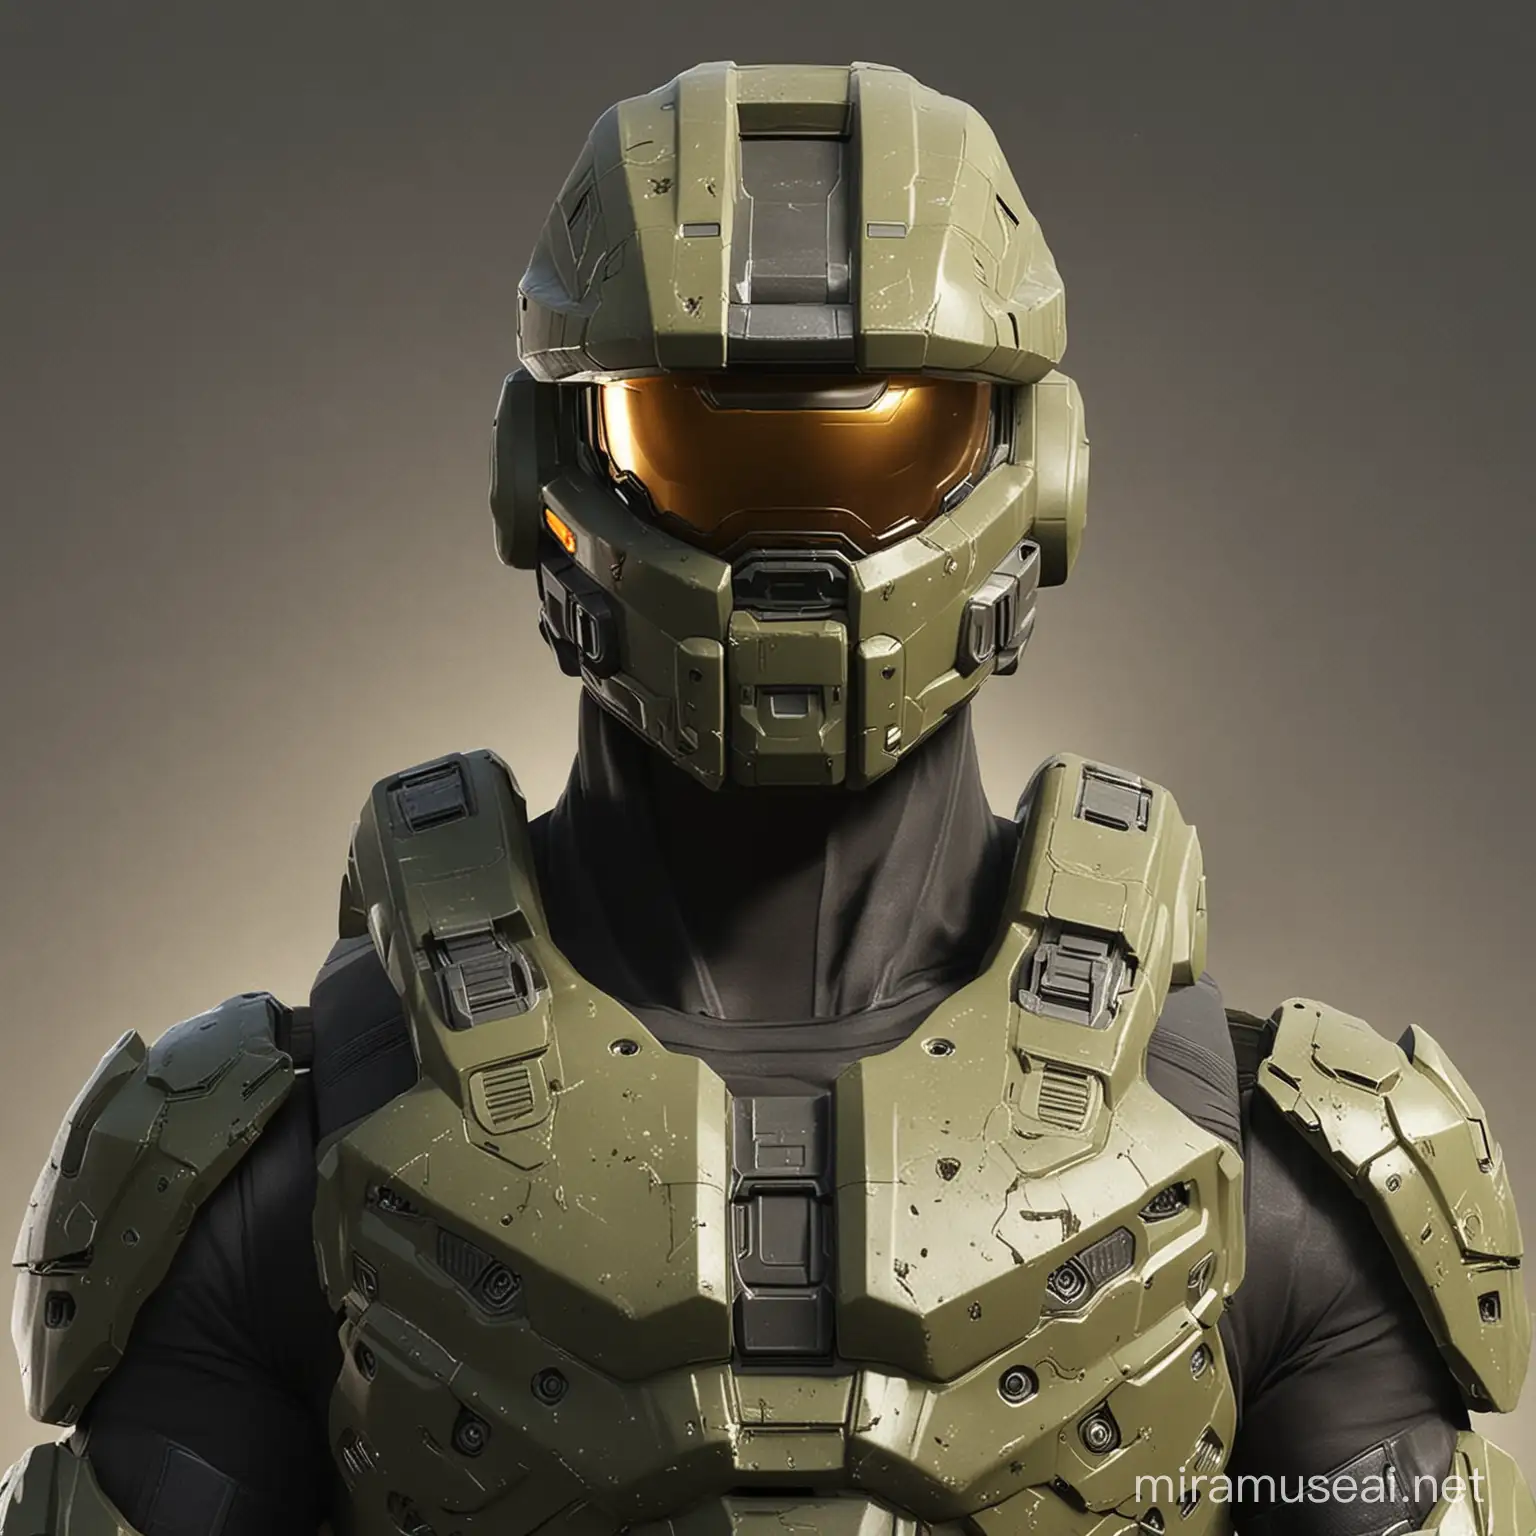 Halo Soldier with X Mark Futuristic Warrior Concept Art